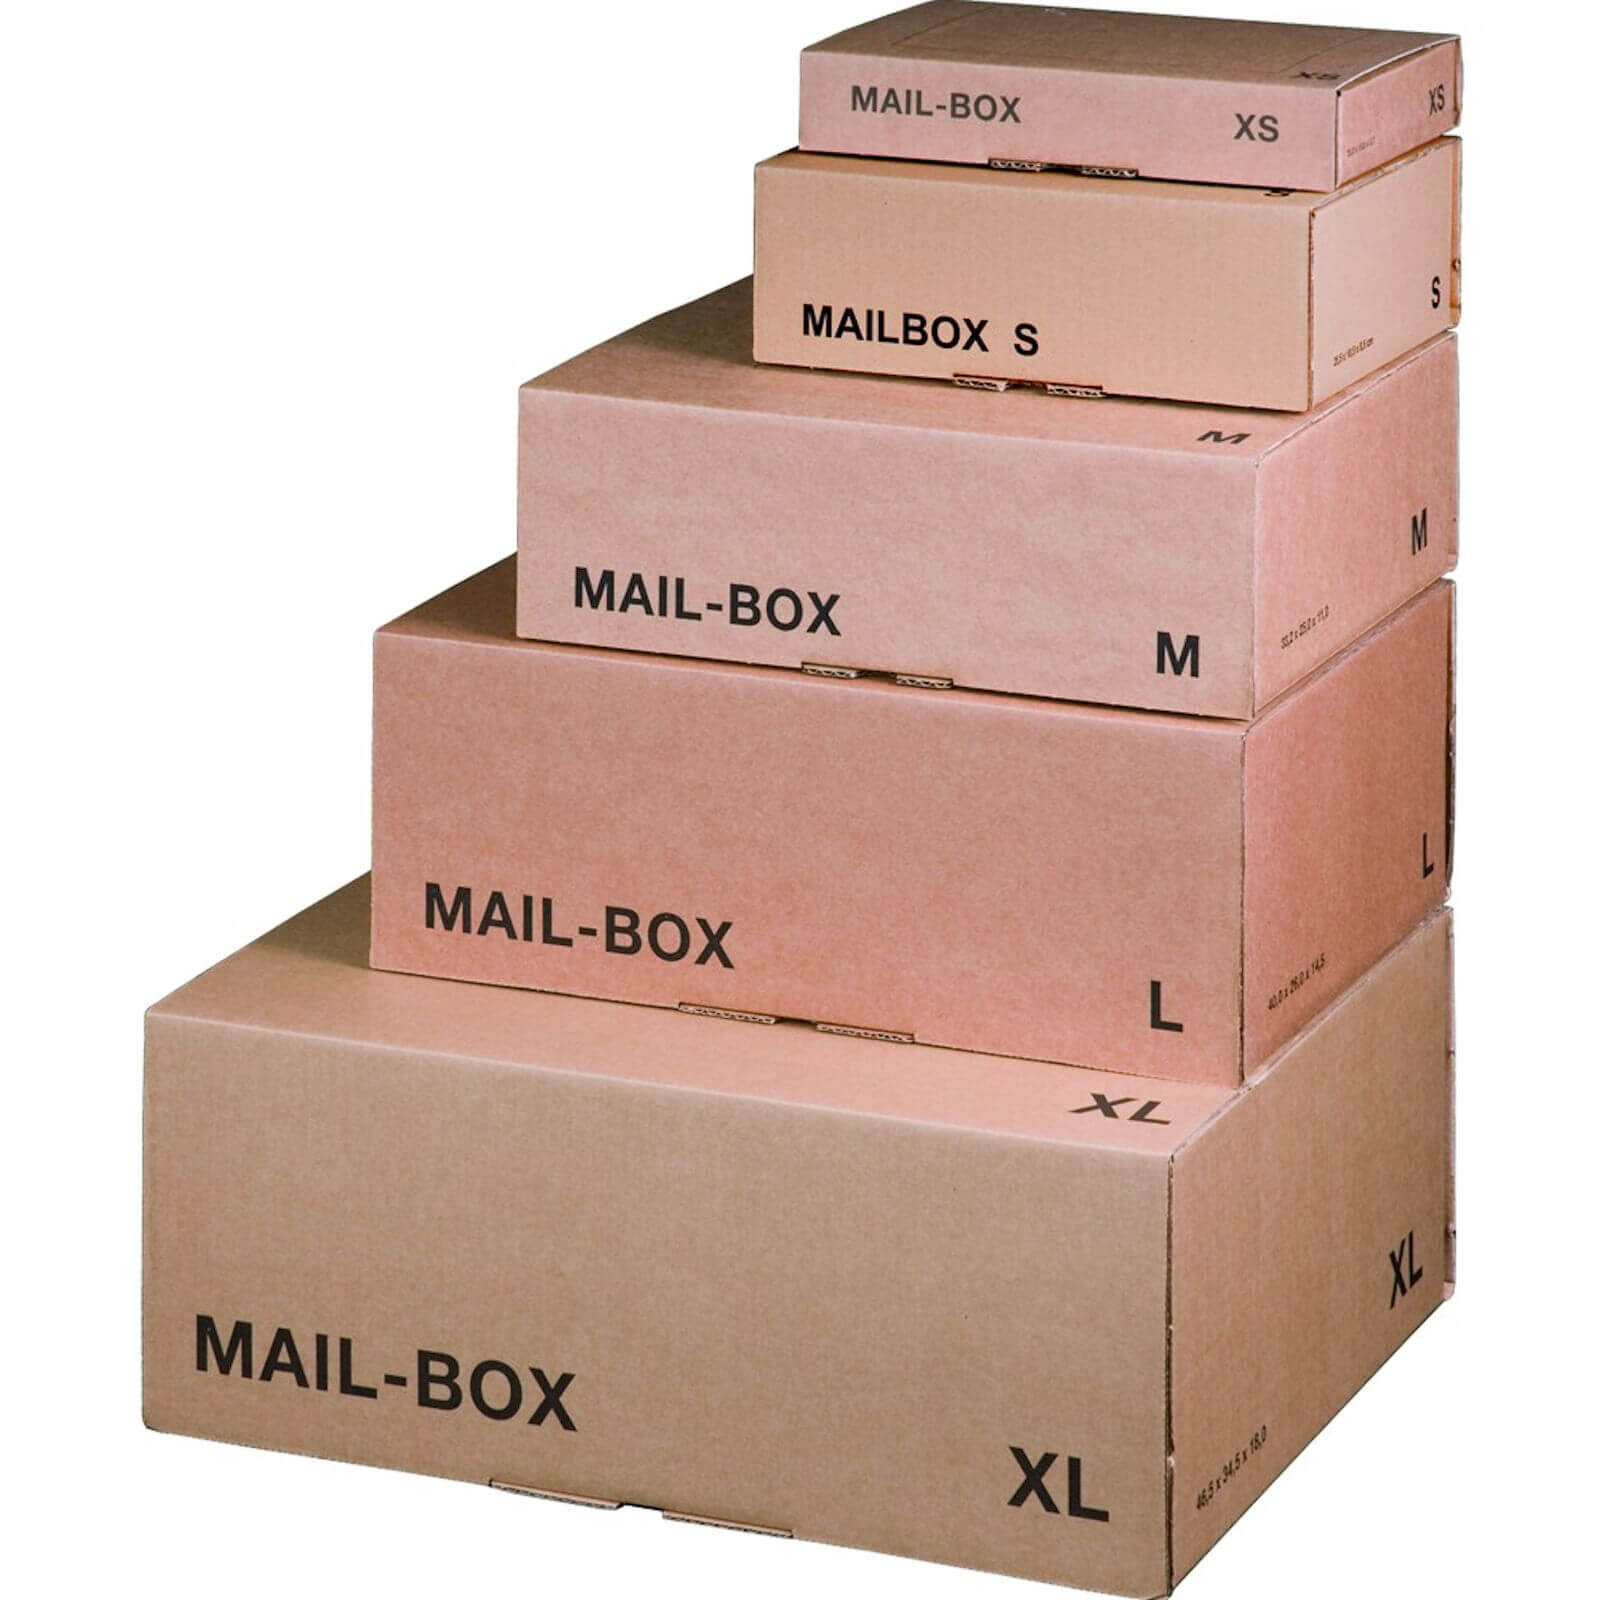 Максимальный размер коробки. Картонные коробки Размеры. Коробки для посылок. Размеры картонных коробок. Упаковочная коробка для посылки.